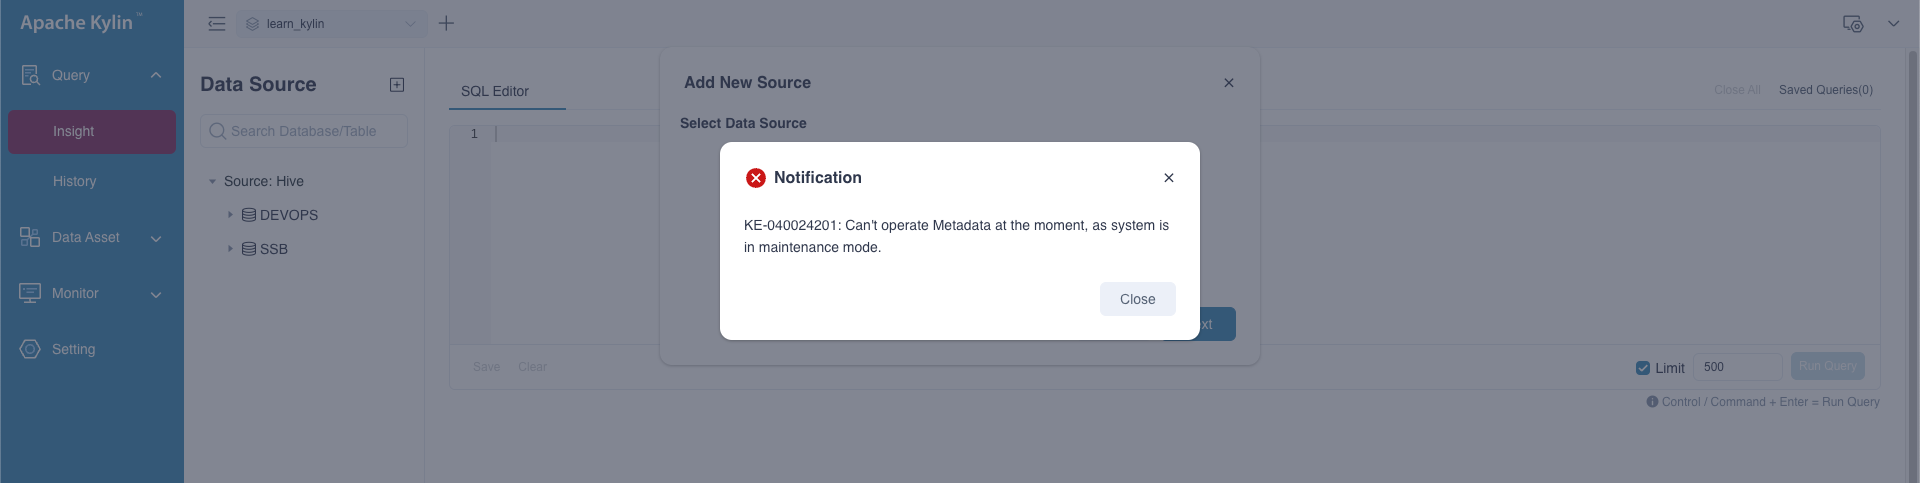 forbidden modify metadata promoting during maintenance mode